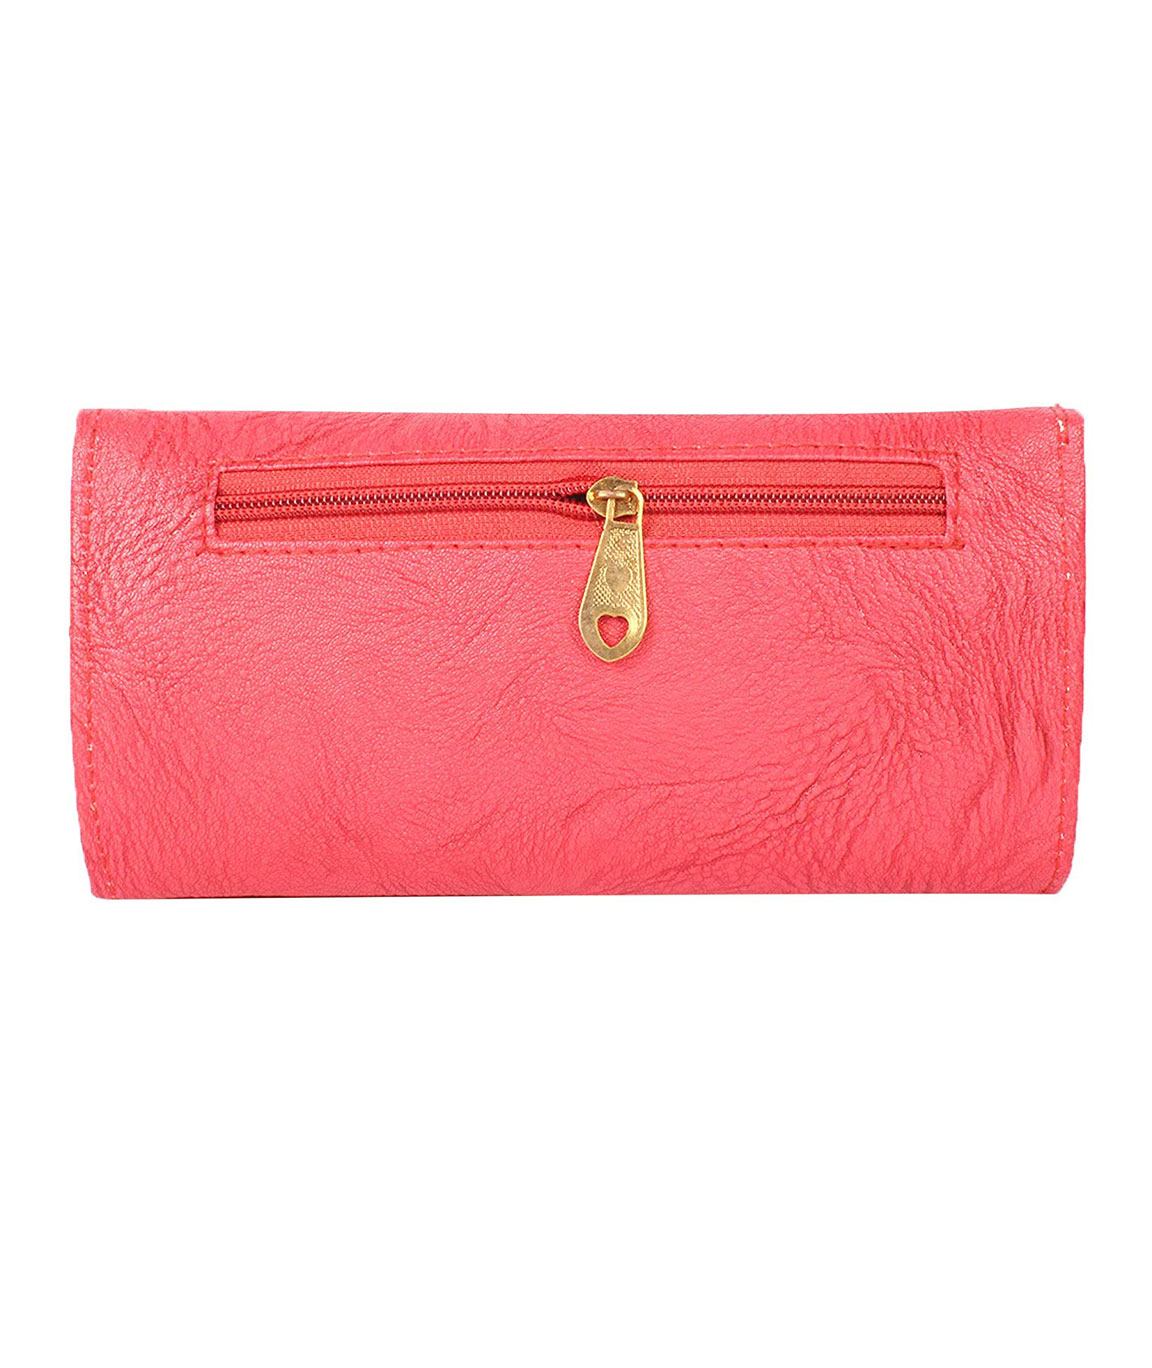 Buy Alexvyan 2 Color Pink Long Women's Purse Wallet Female Clutch Bag Women /Ladies/Girls Wallets Long Purses Card Holder Phone Pocket at Amazon.in